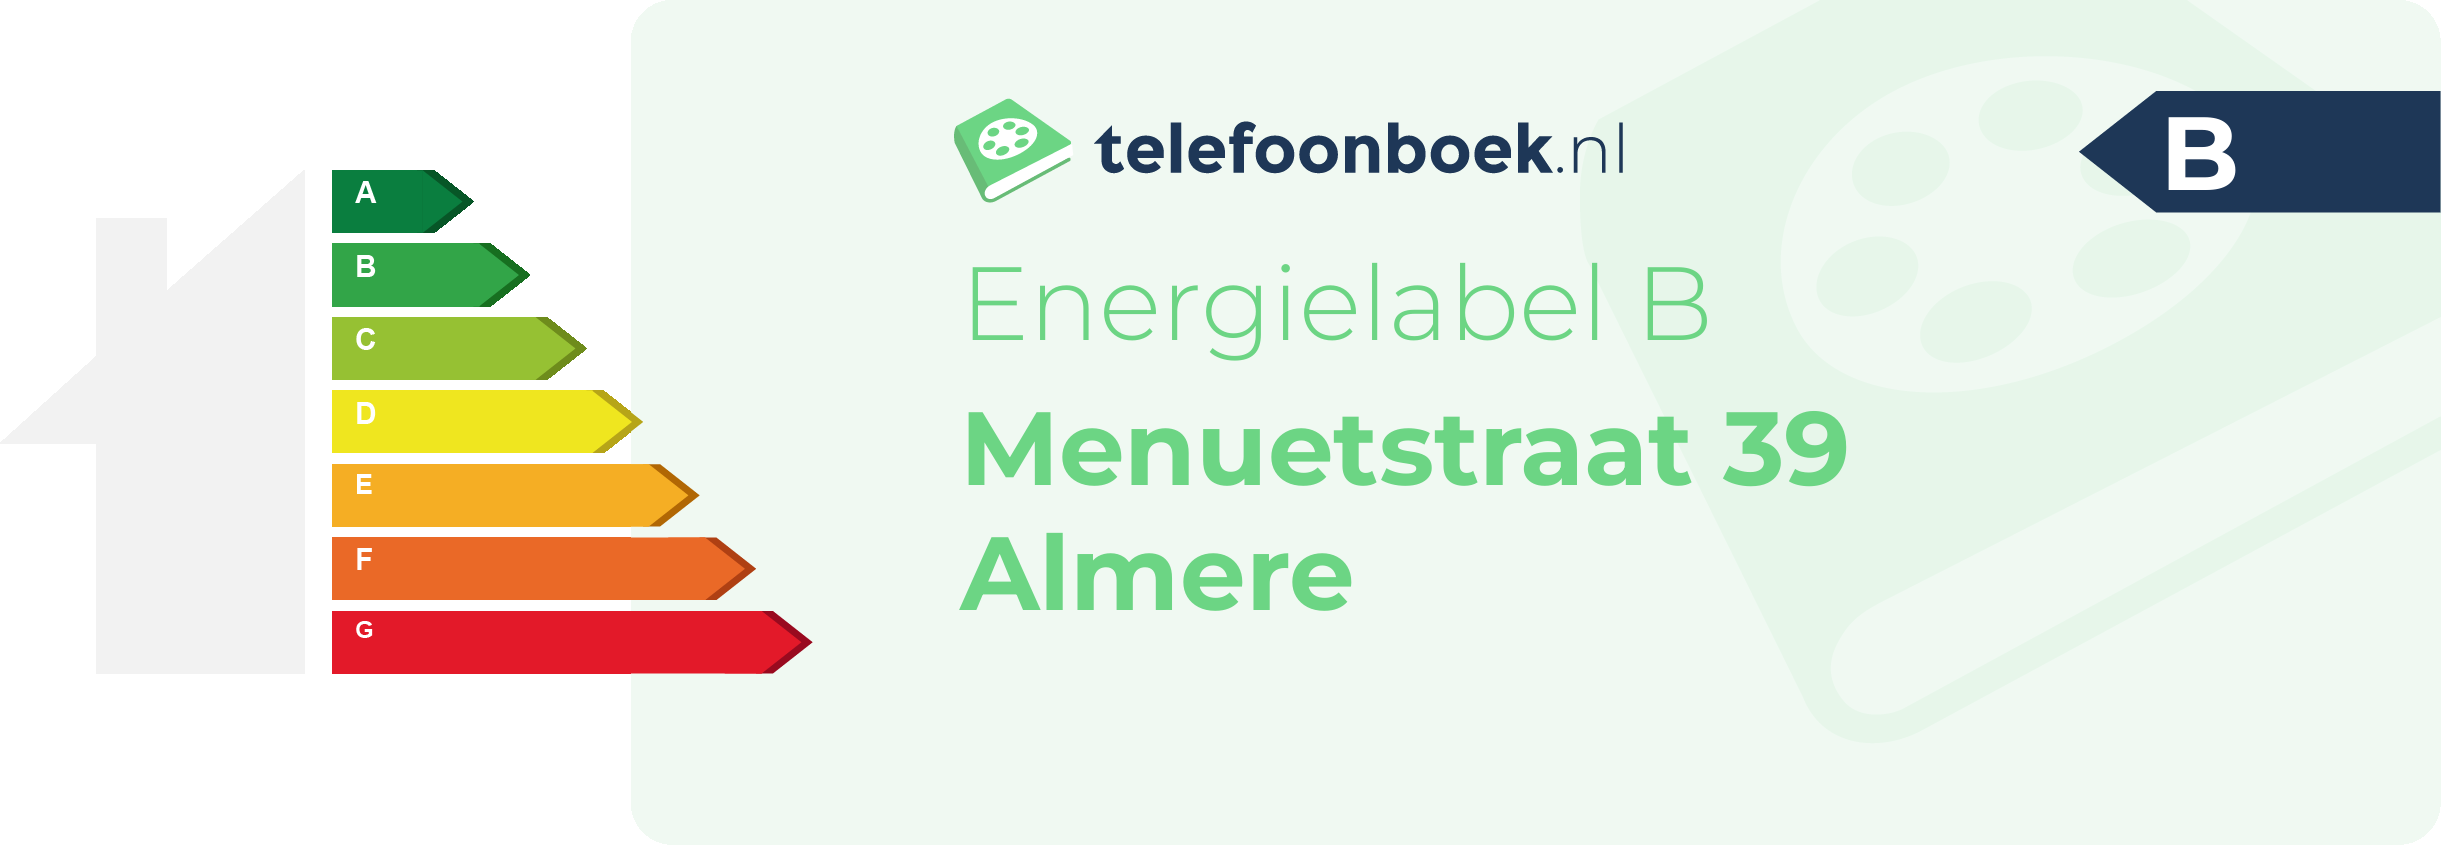 Energielabel Menuetstraat 39 Almere